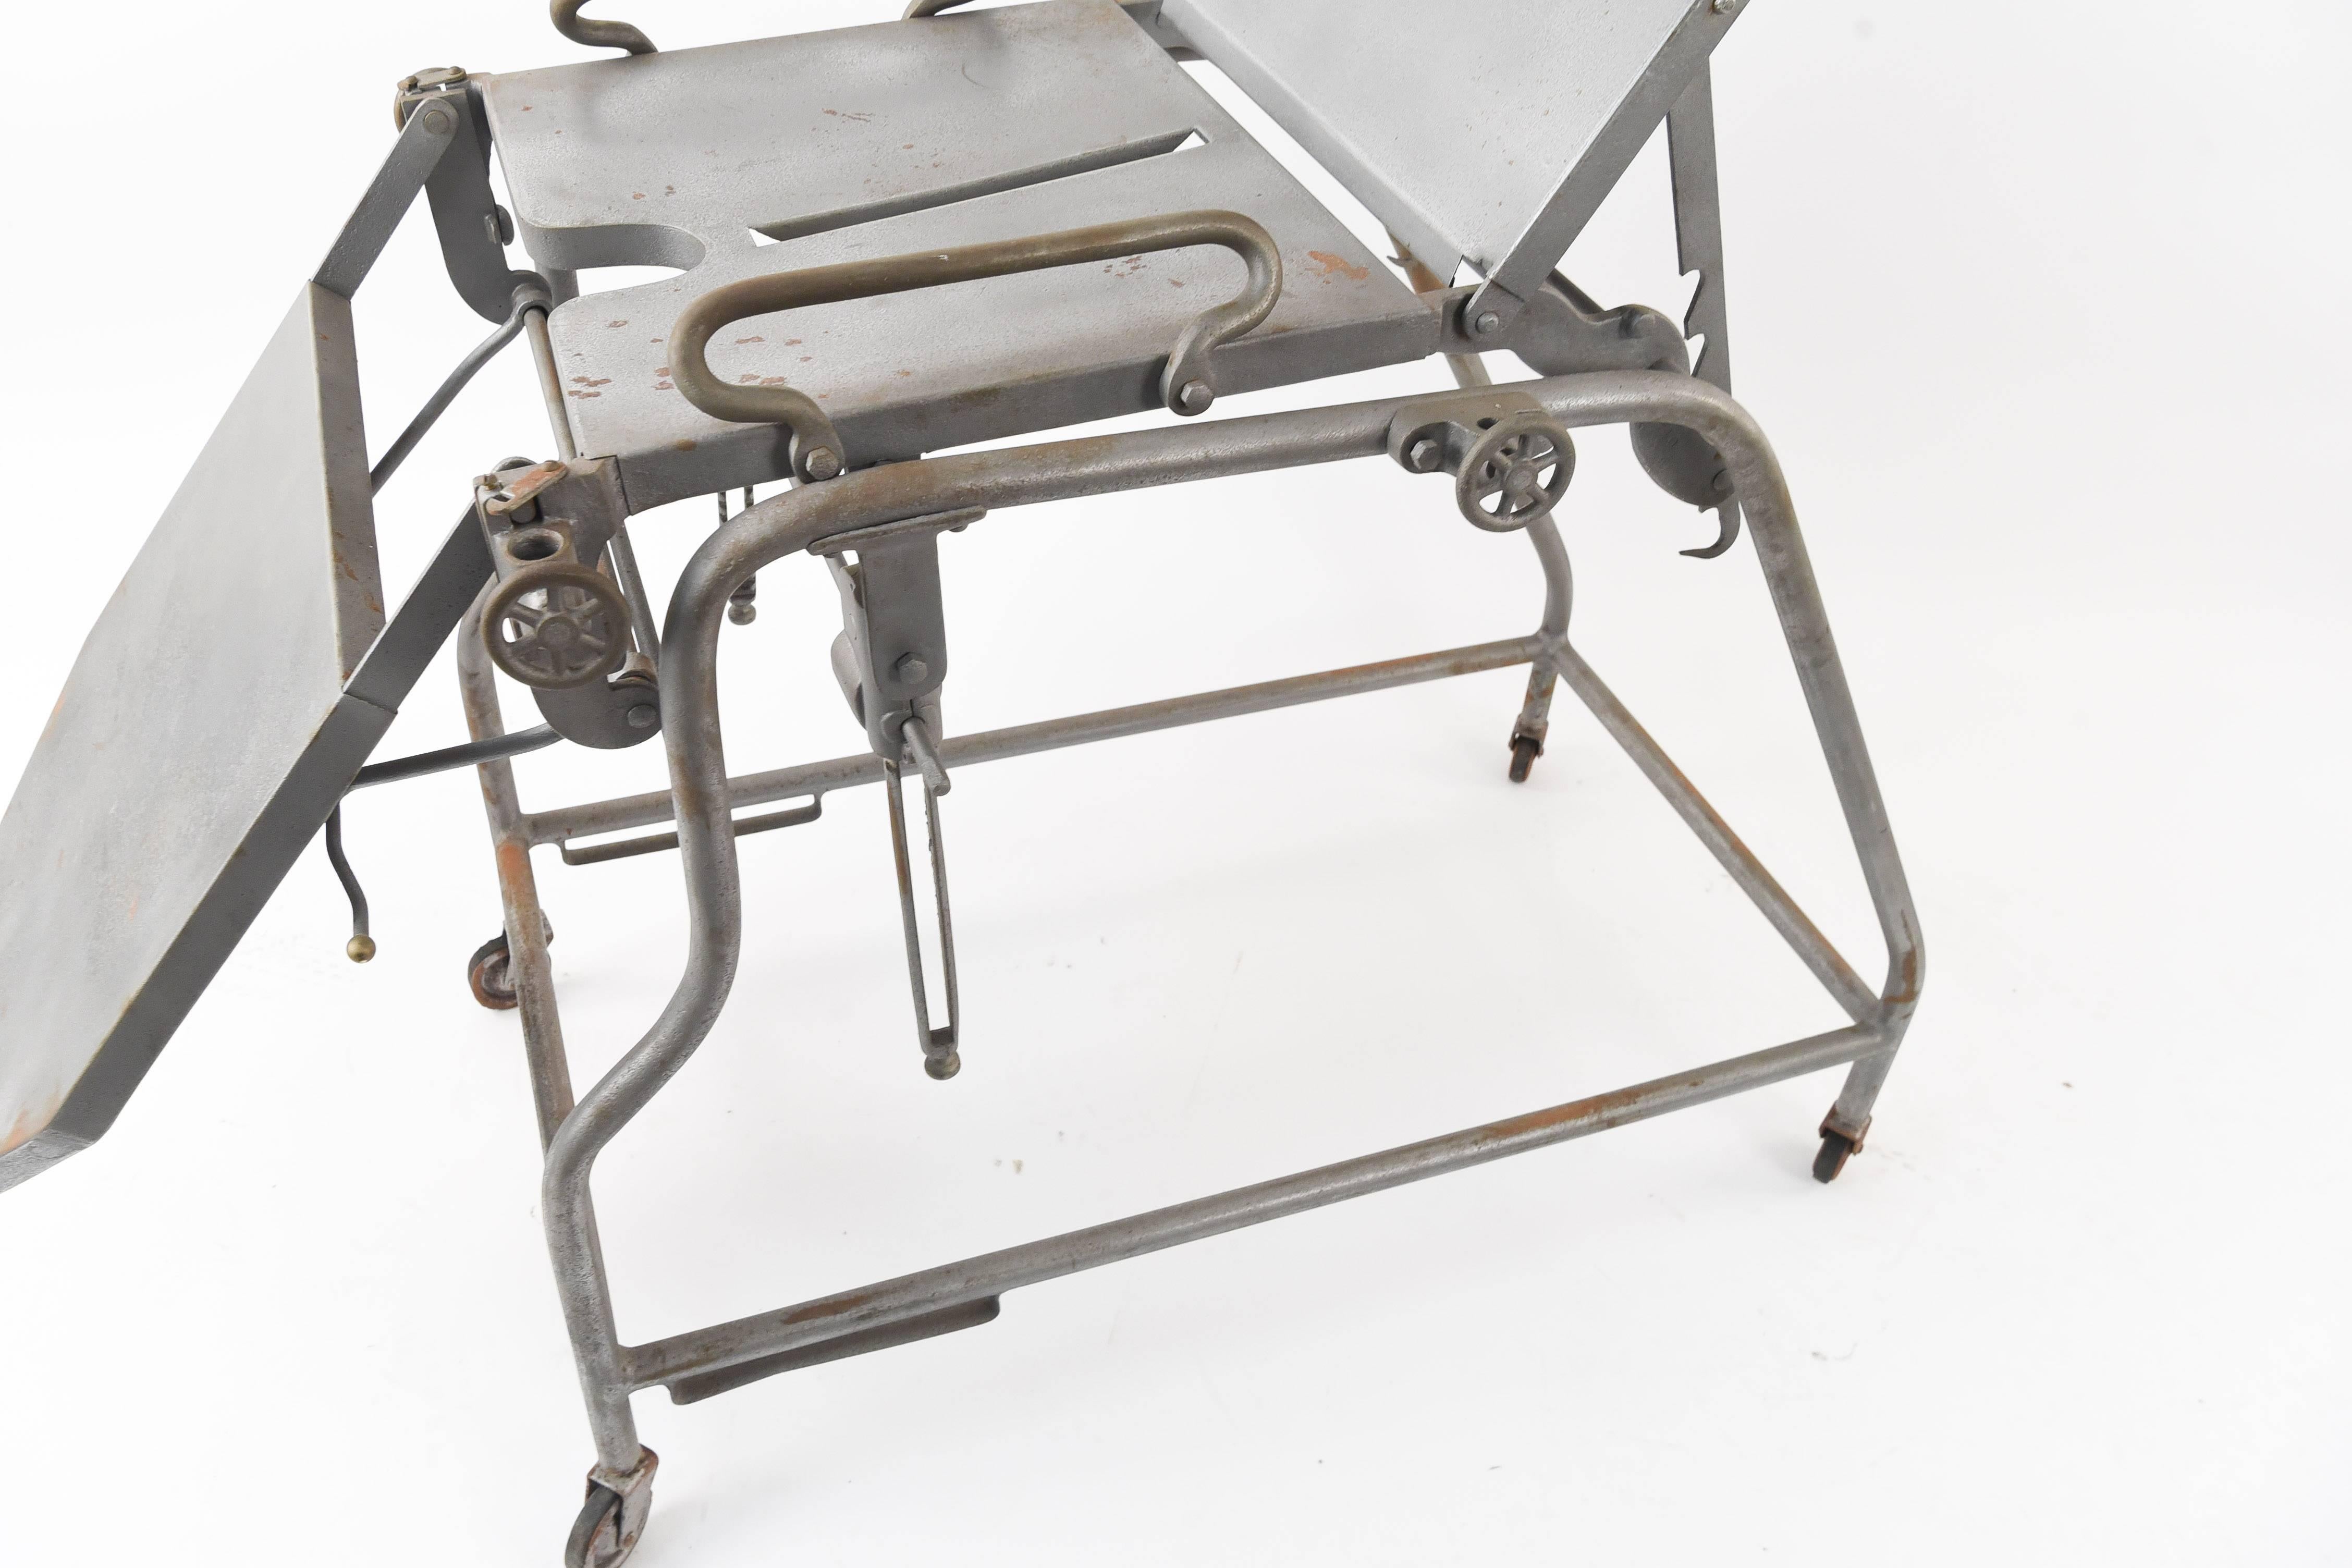 antique medical chair